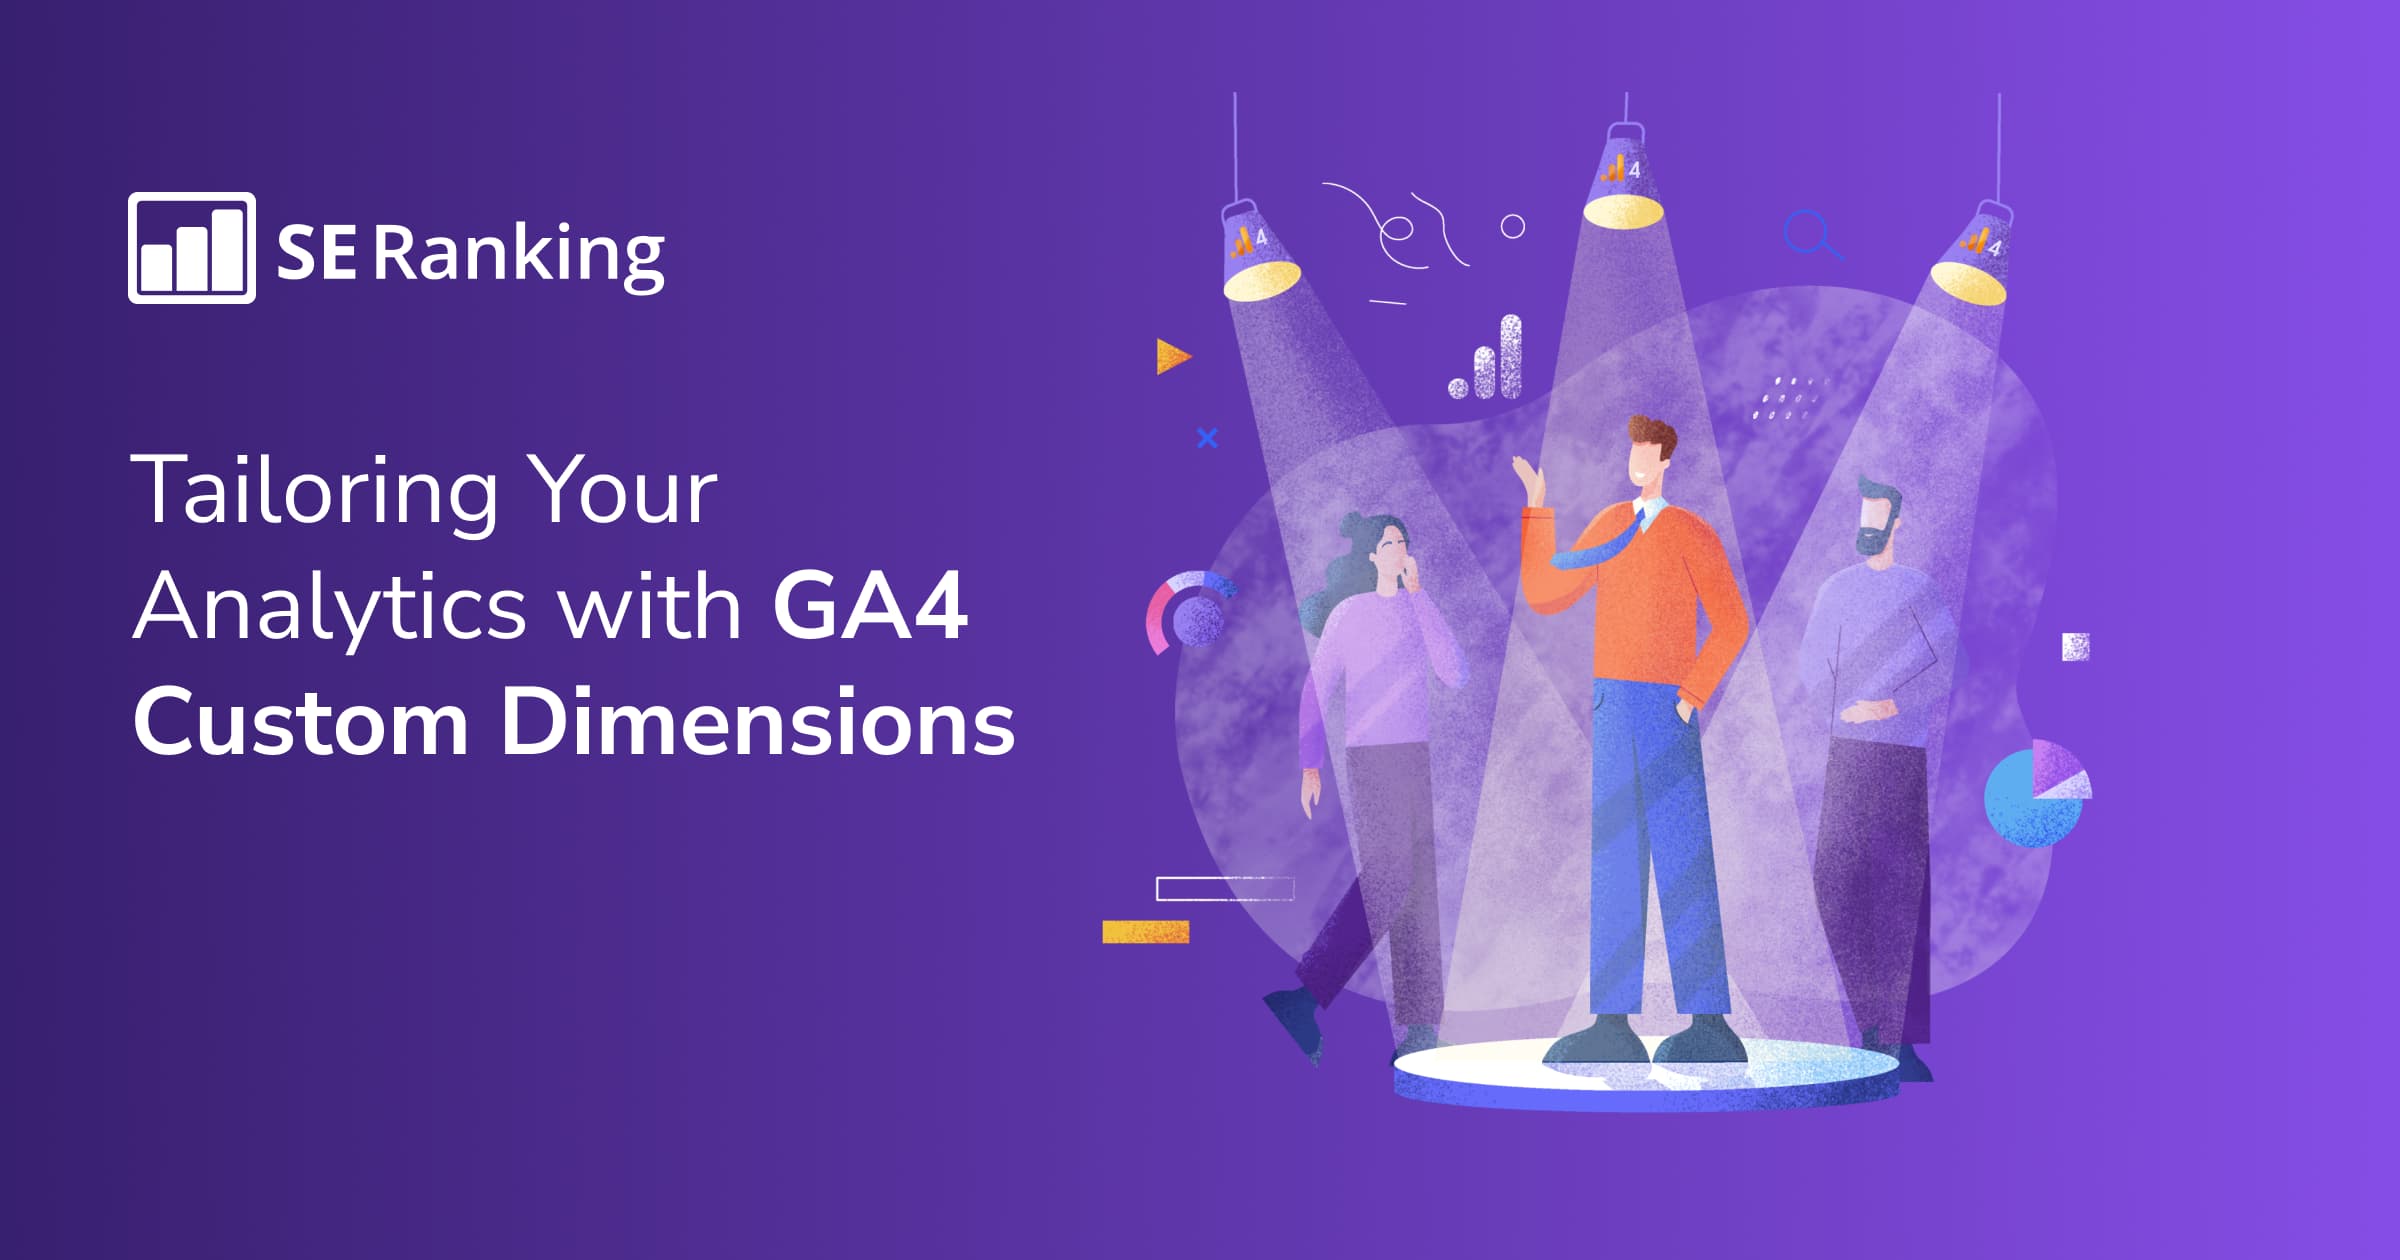 GA4 Custom Dimensions Guide to Pro-Level Analytics